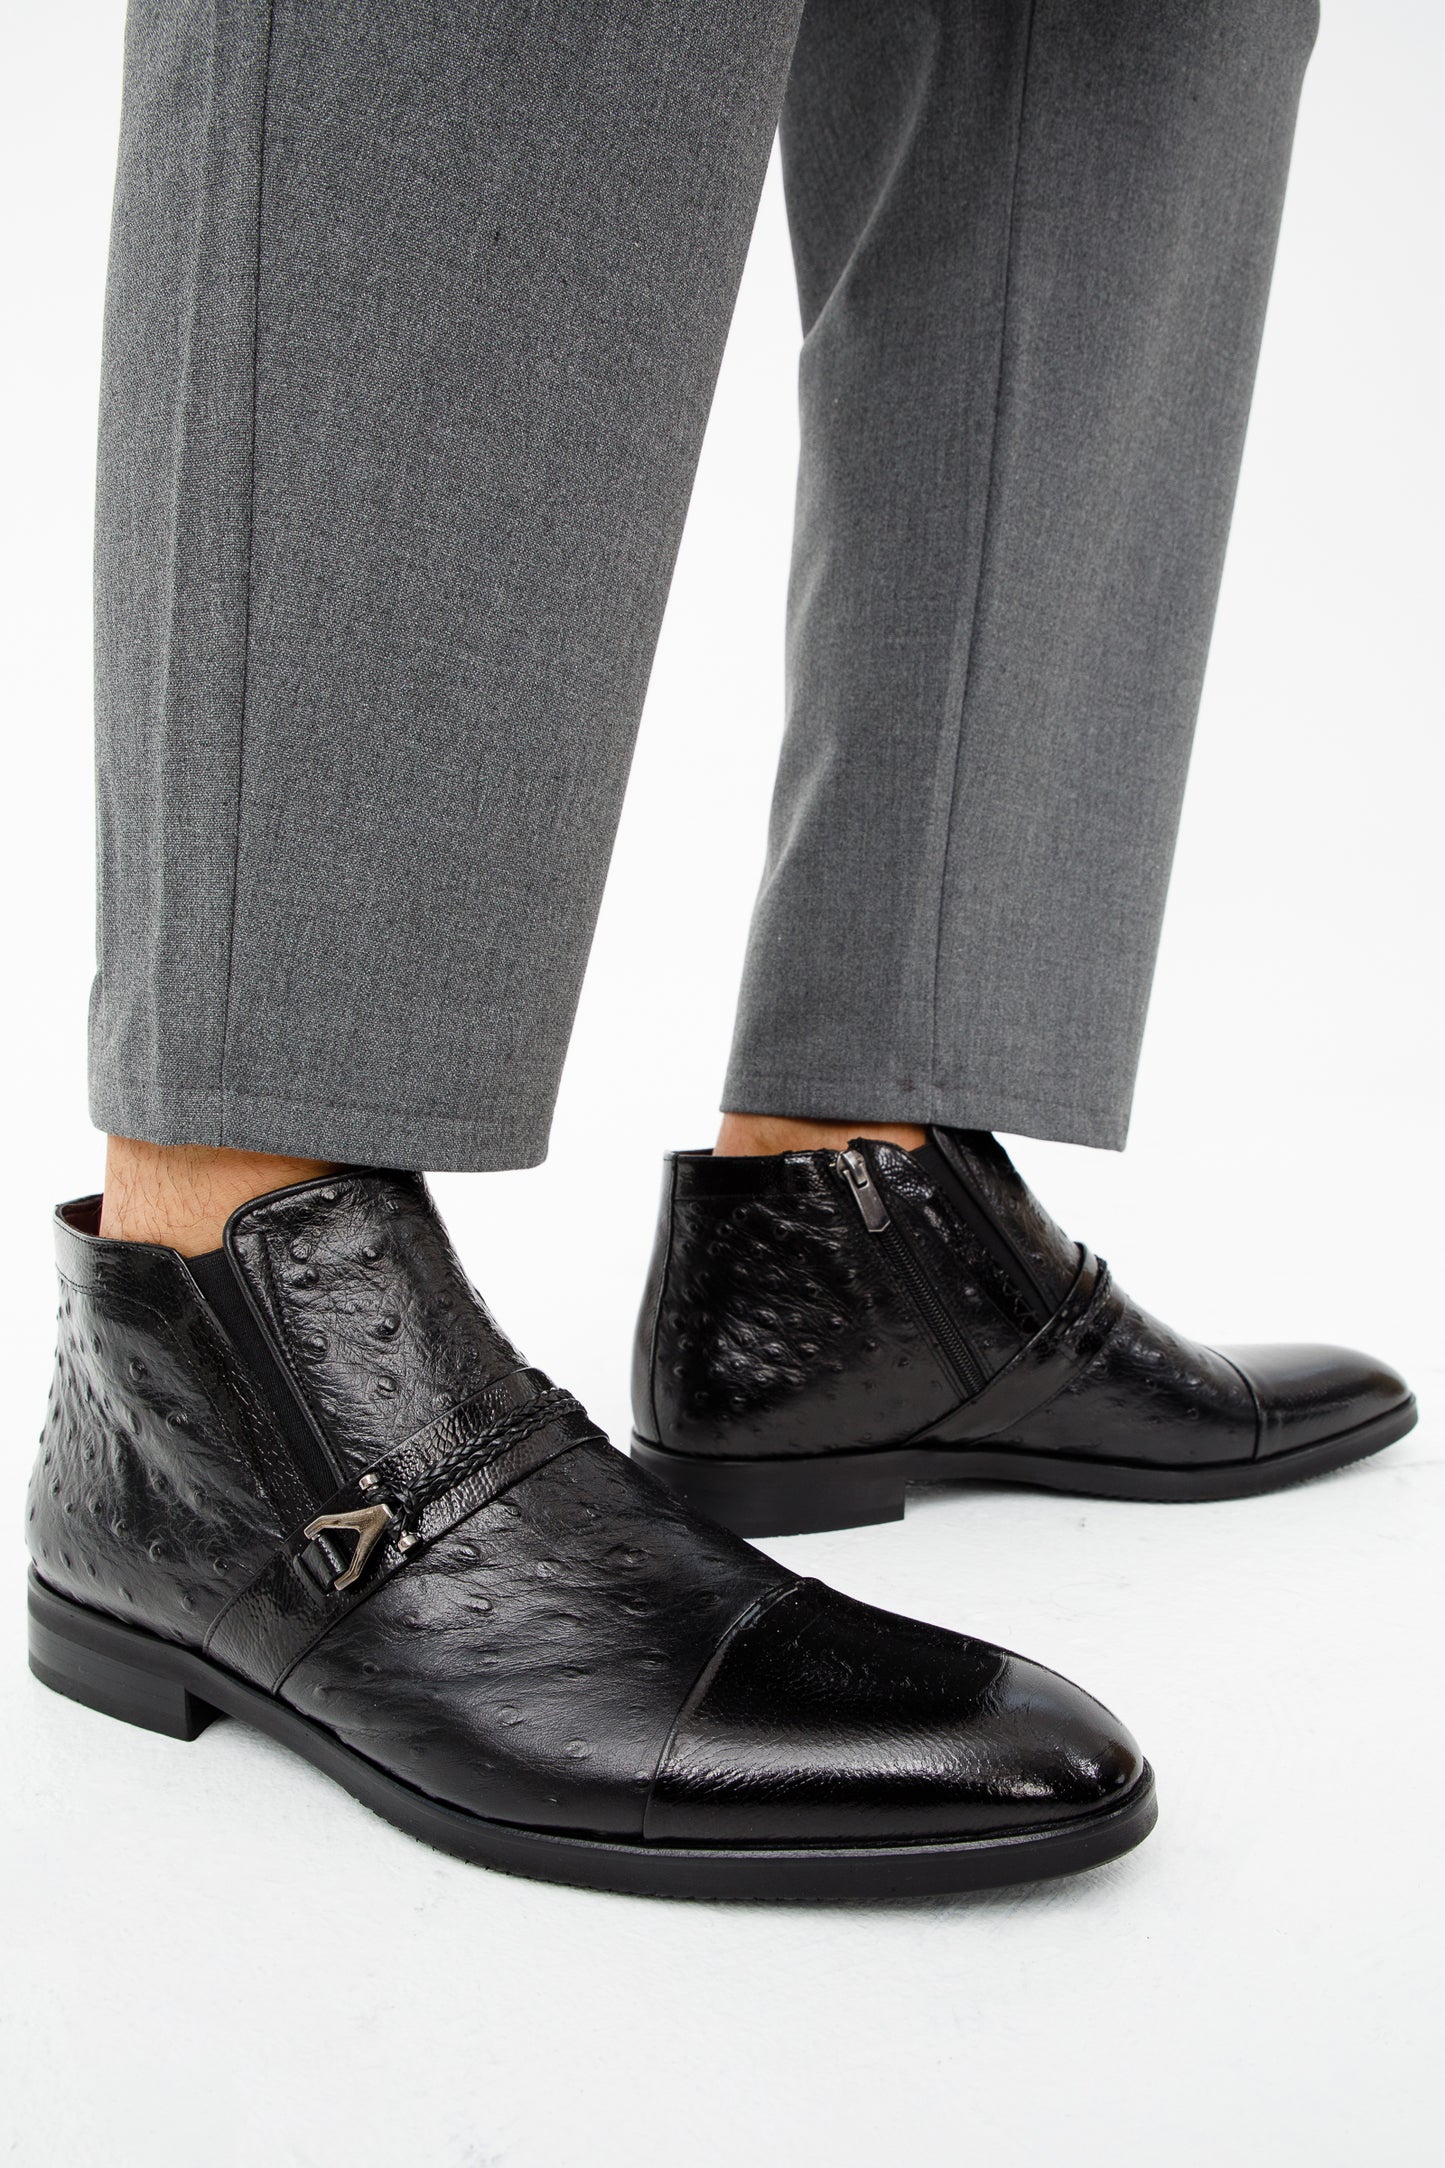 The Dallas Black Leather Bit Ankle Zip-Up Dress Men Boot